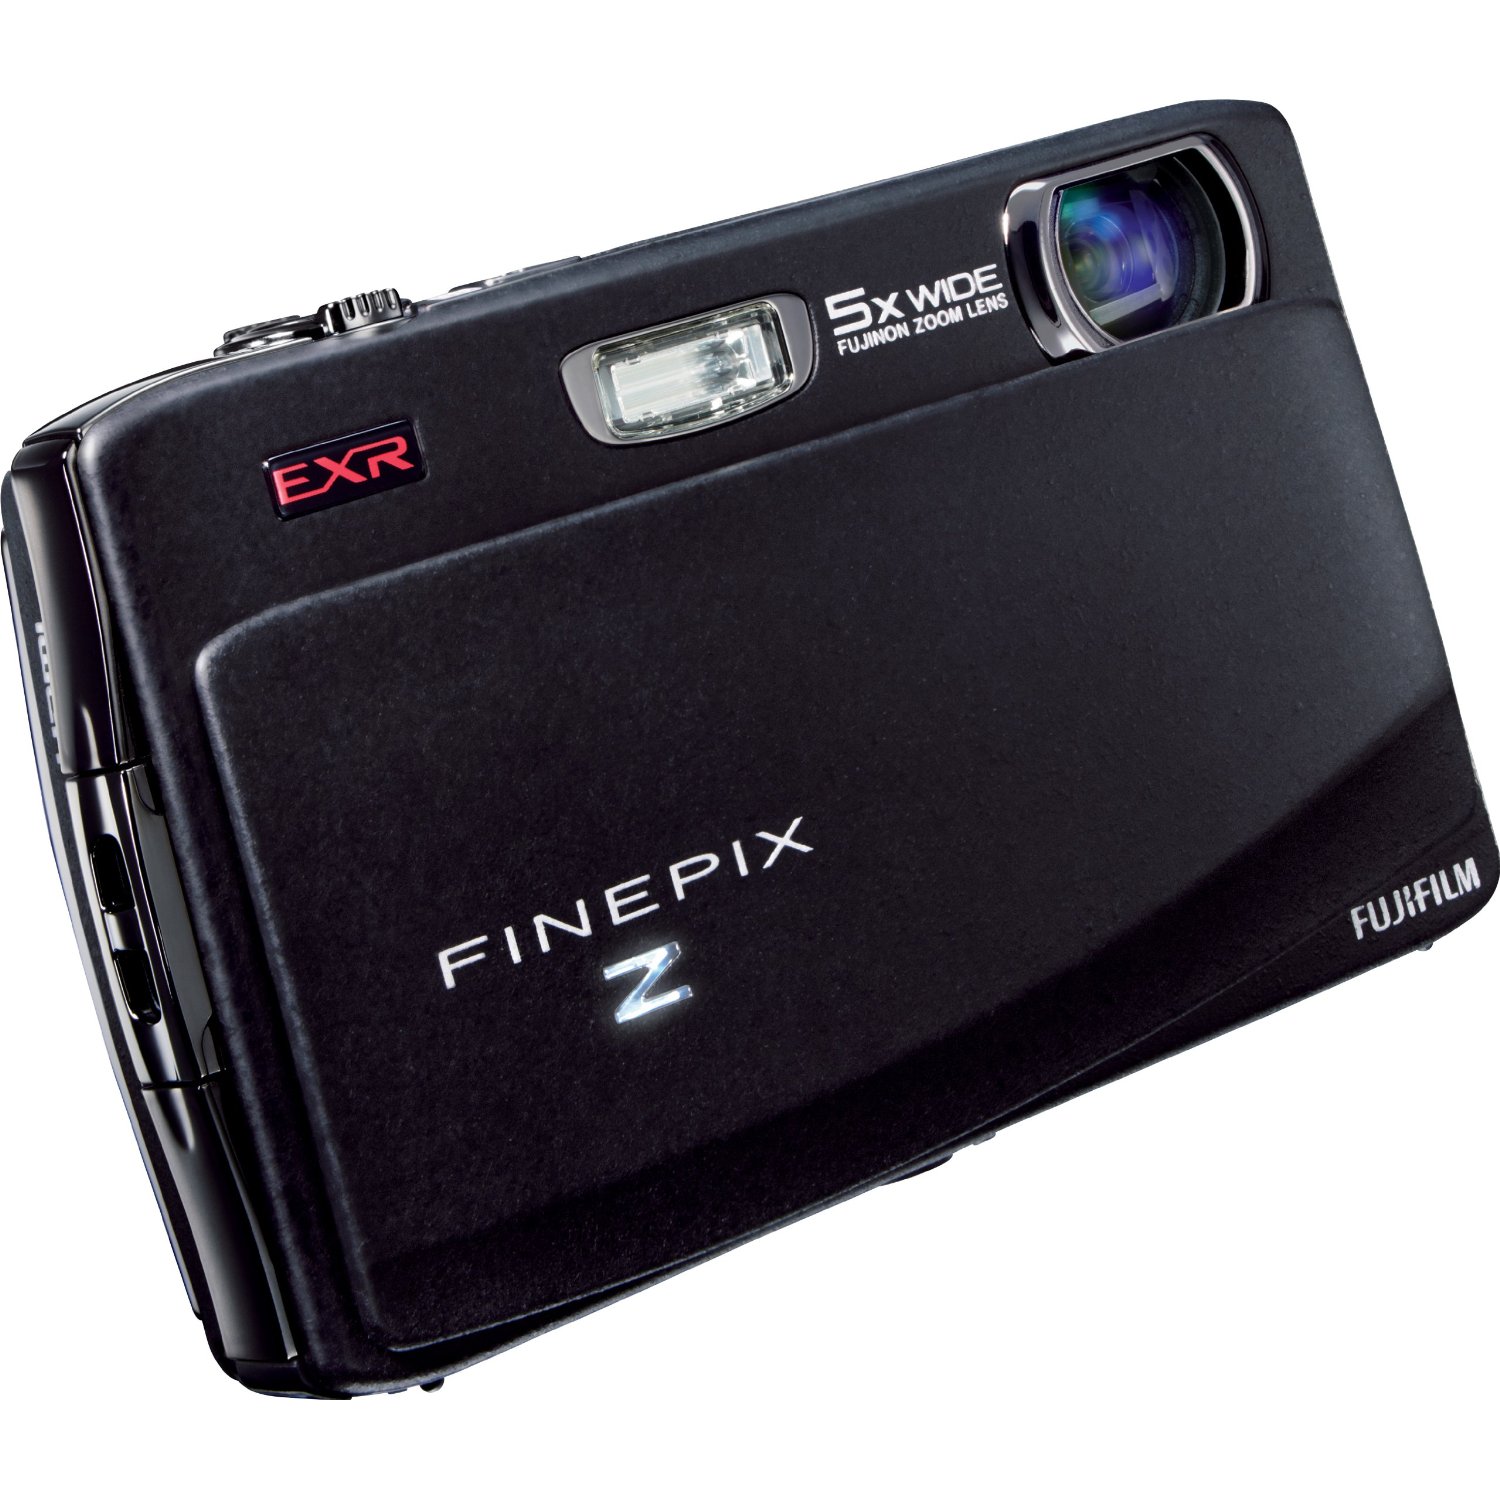 http://thetechjournal.com/wp-content/uploads/images/1109/1316760746-fujifilm-finepix-z900exr-16-mp-touchscreen-digital-camera-5.jpg